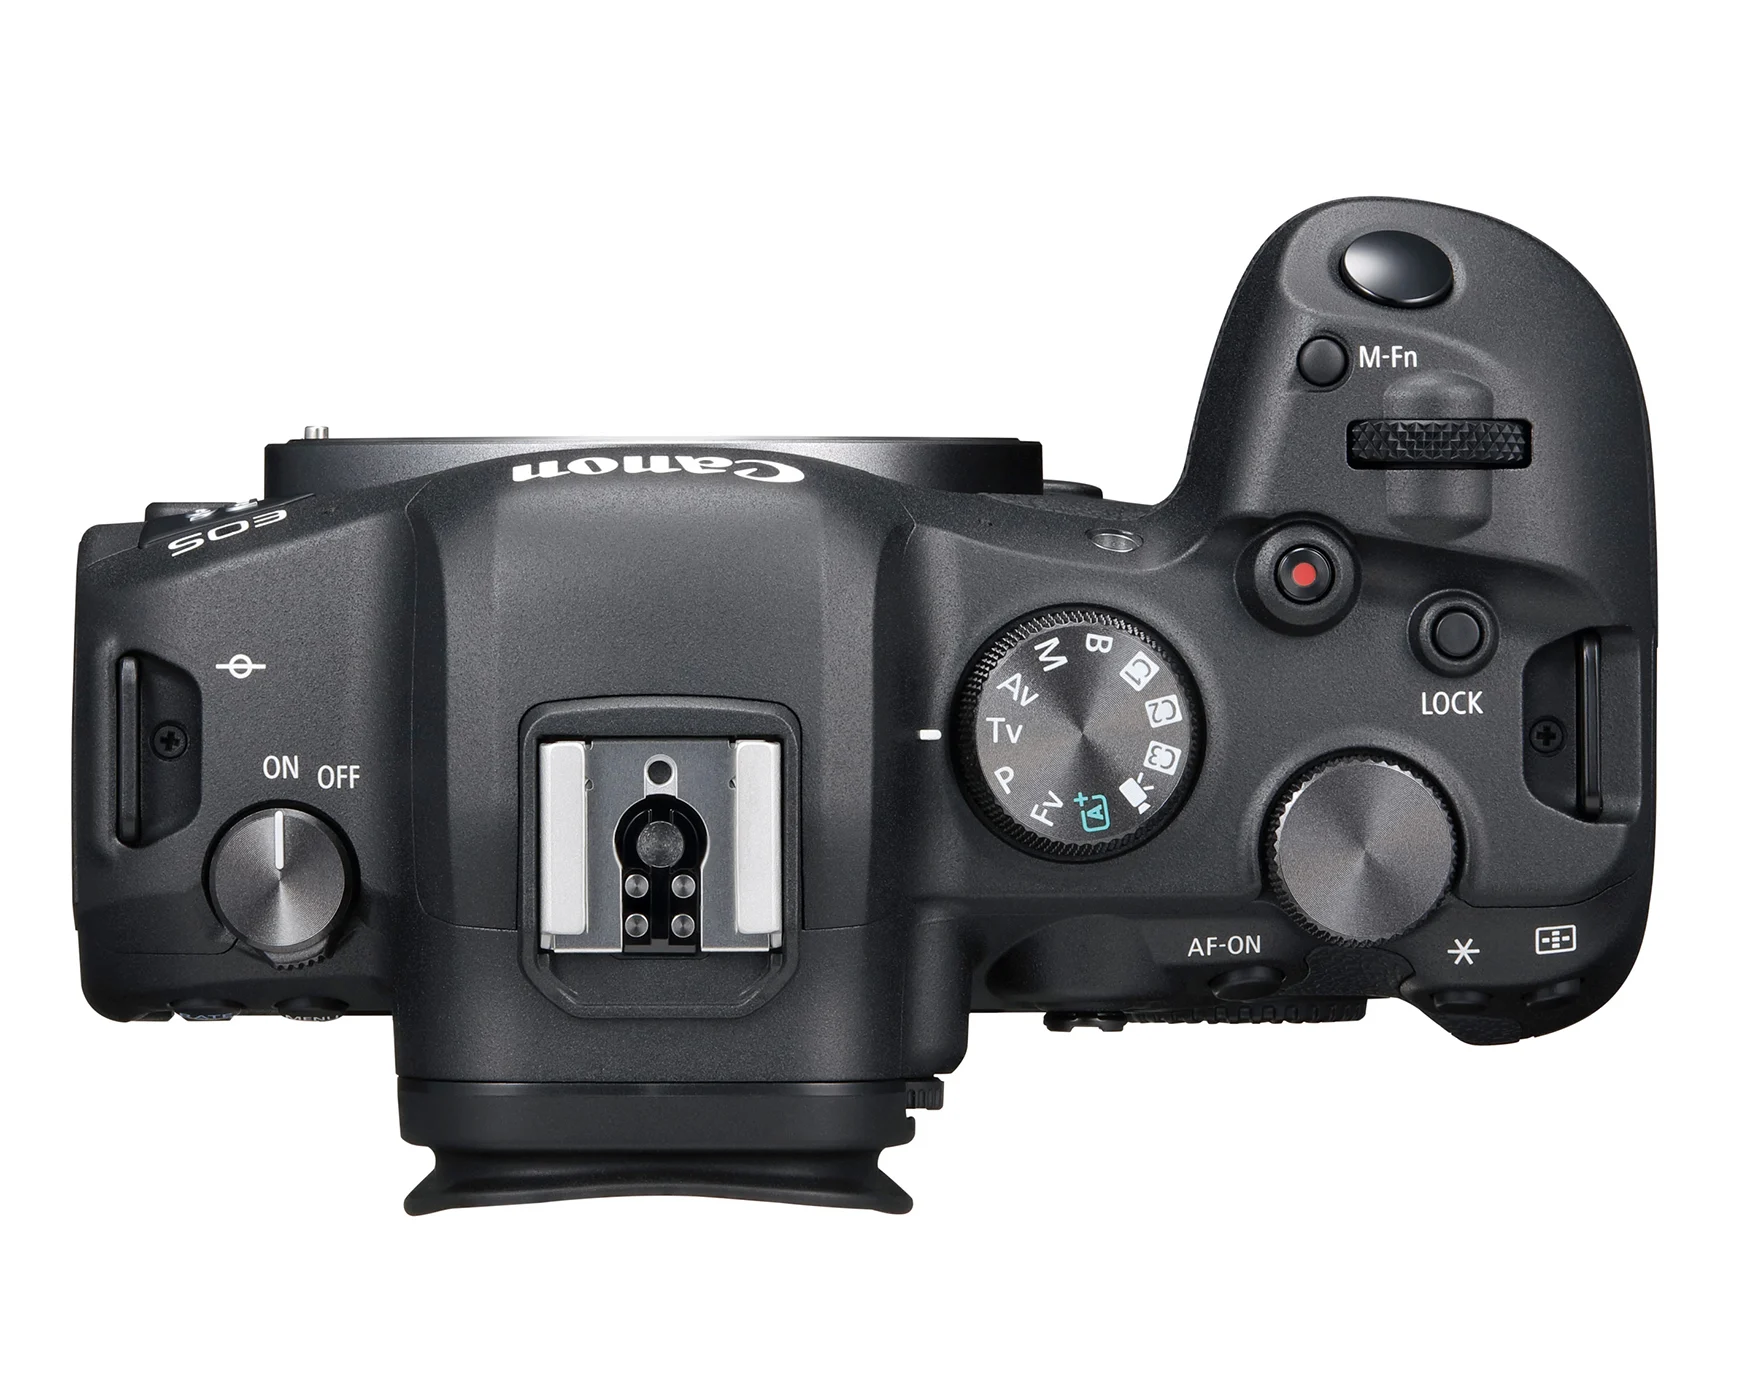 Canon EOS R6 full-frame mirrorless camera